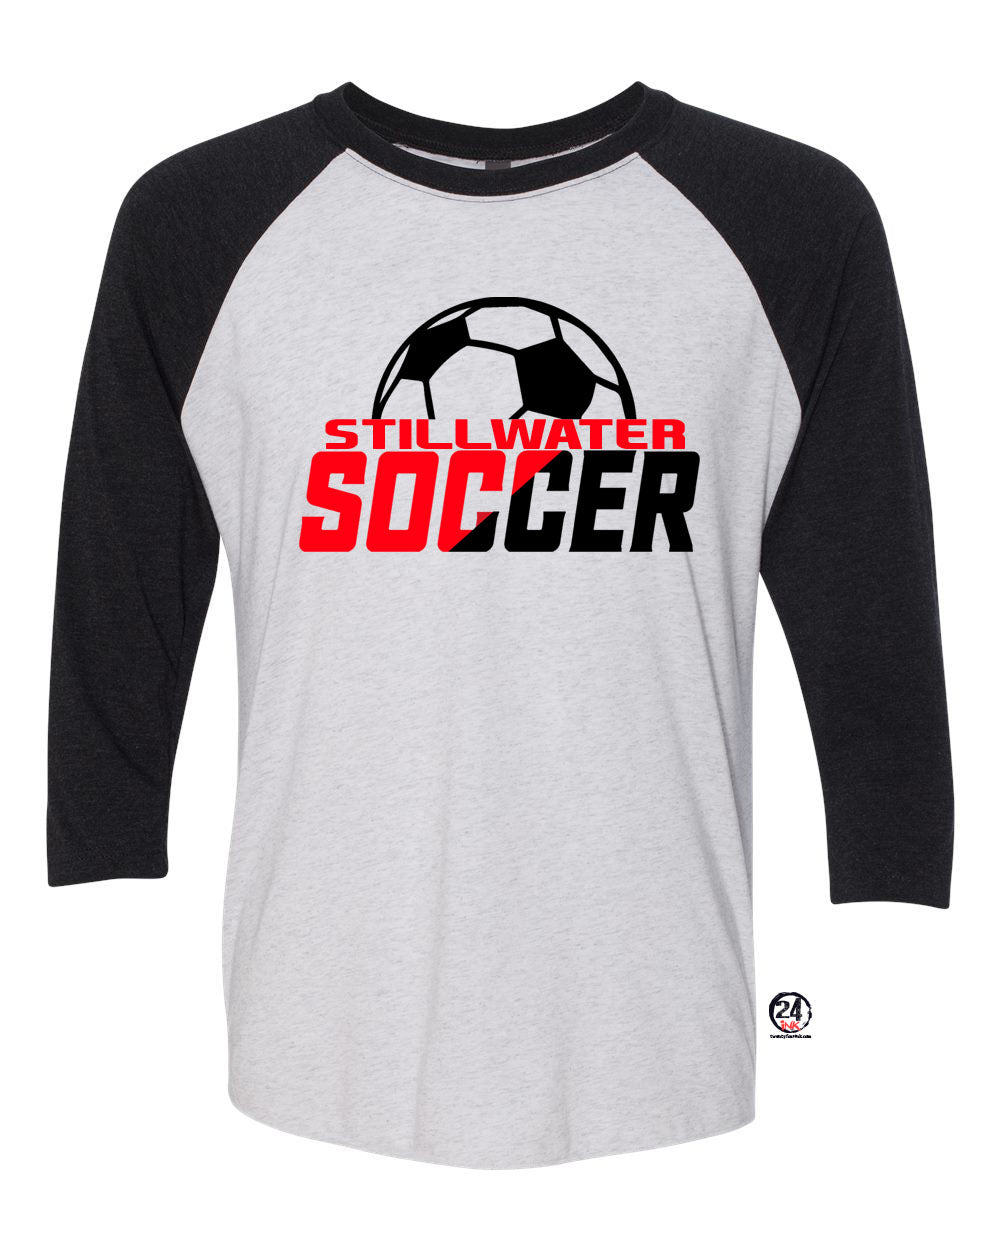 Stillwater Soccer design 1 raglan shirt